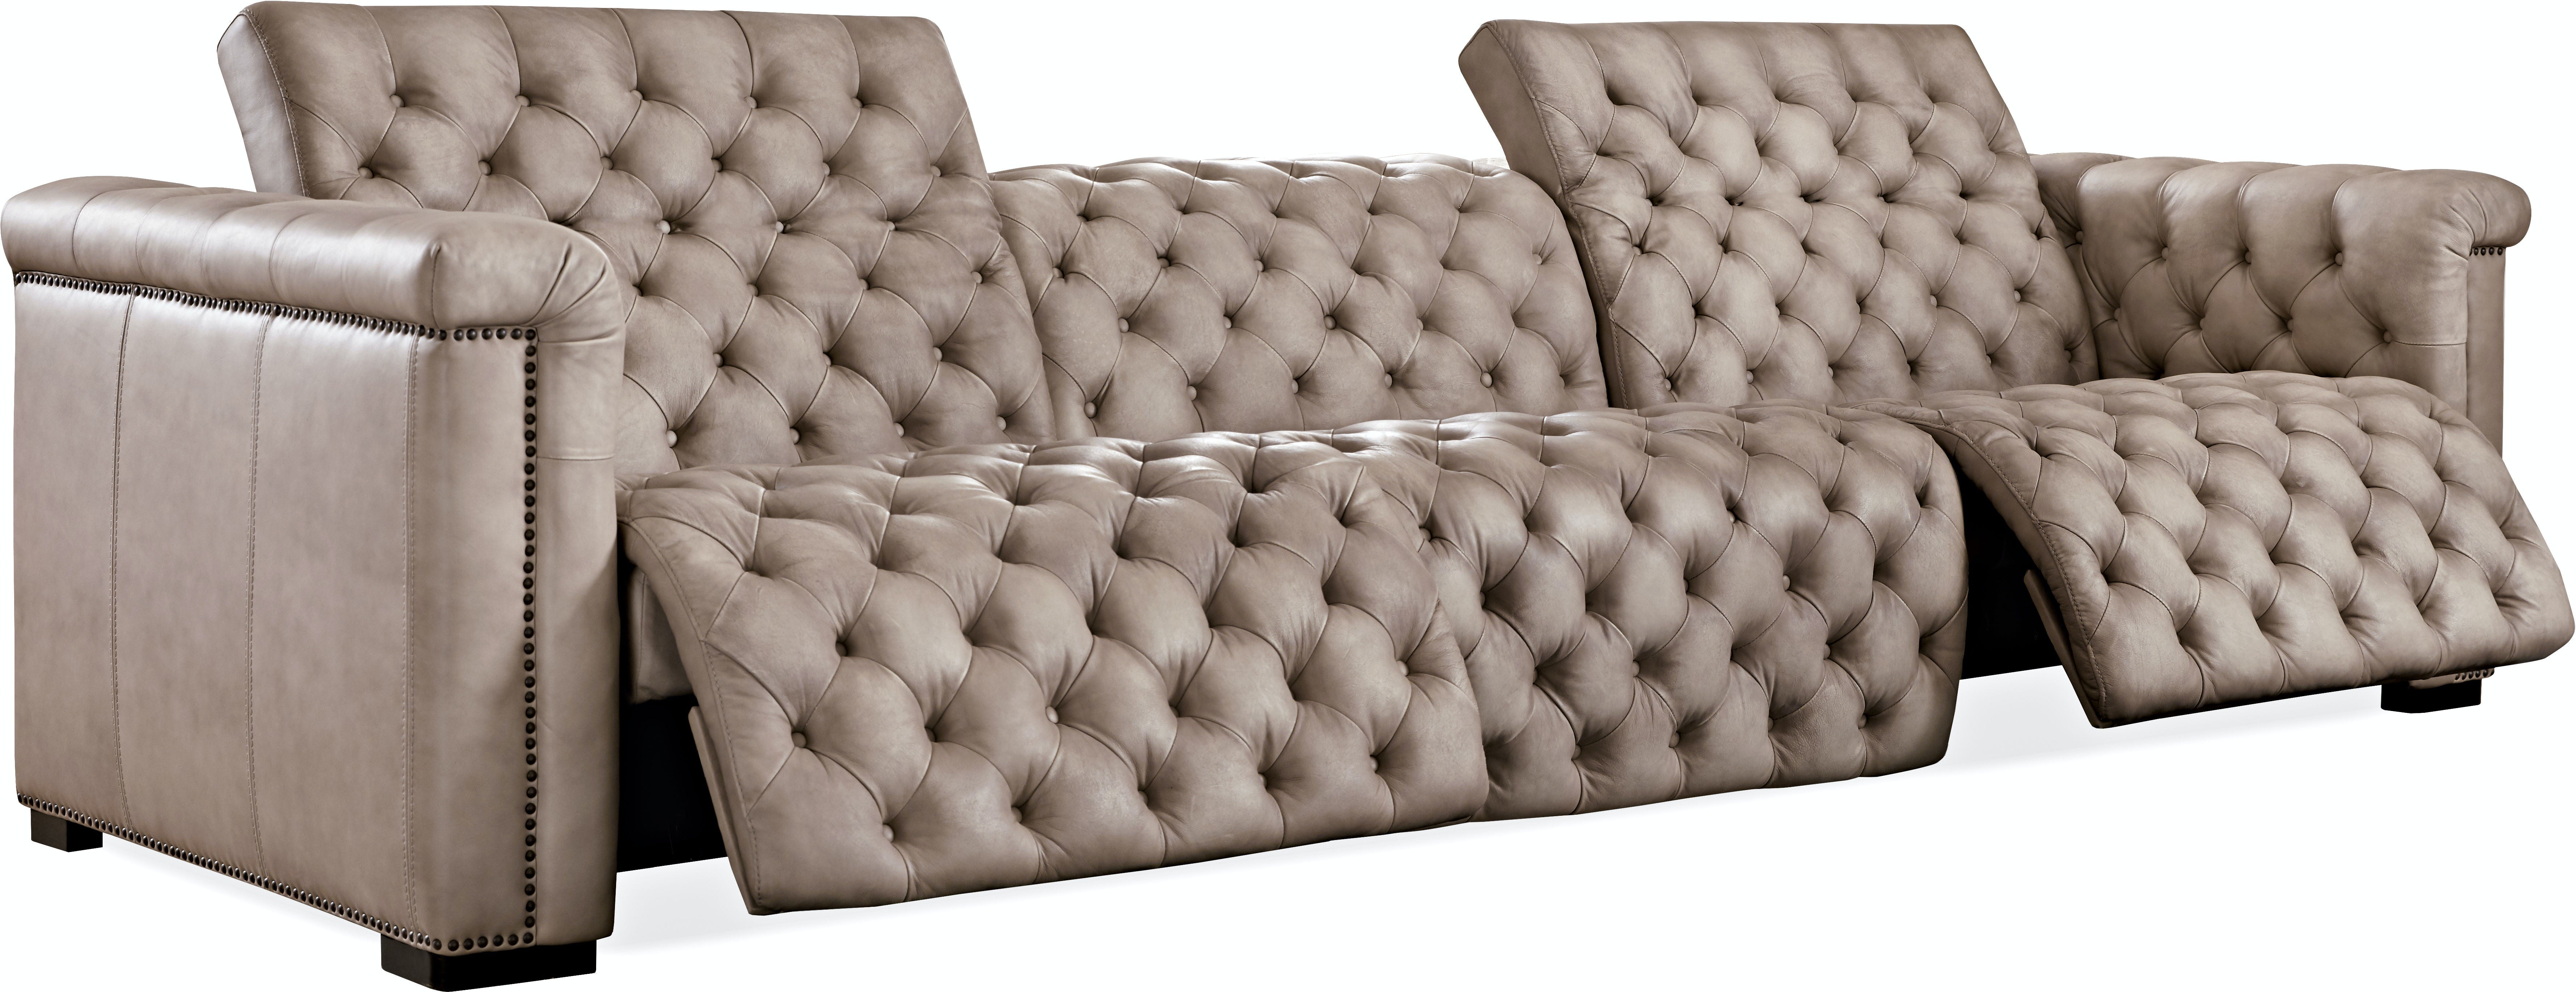 Hooker Furniture Recliner Sofa